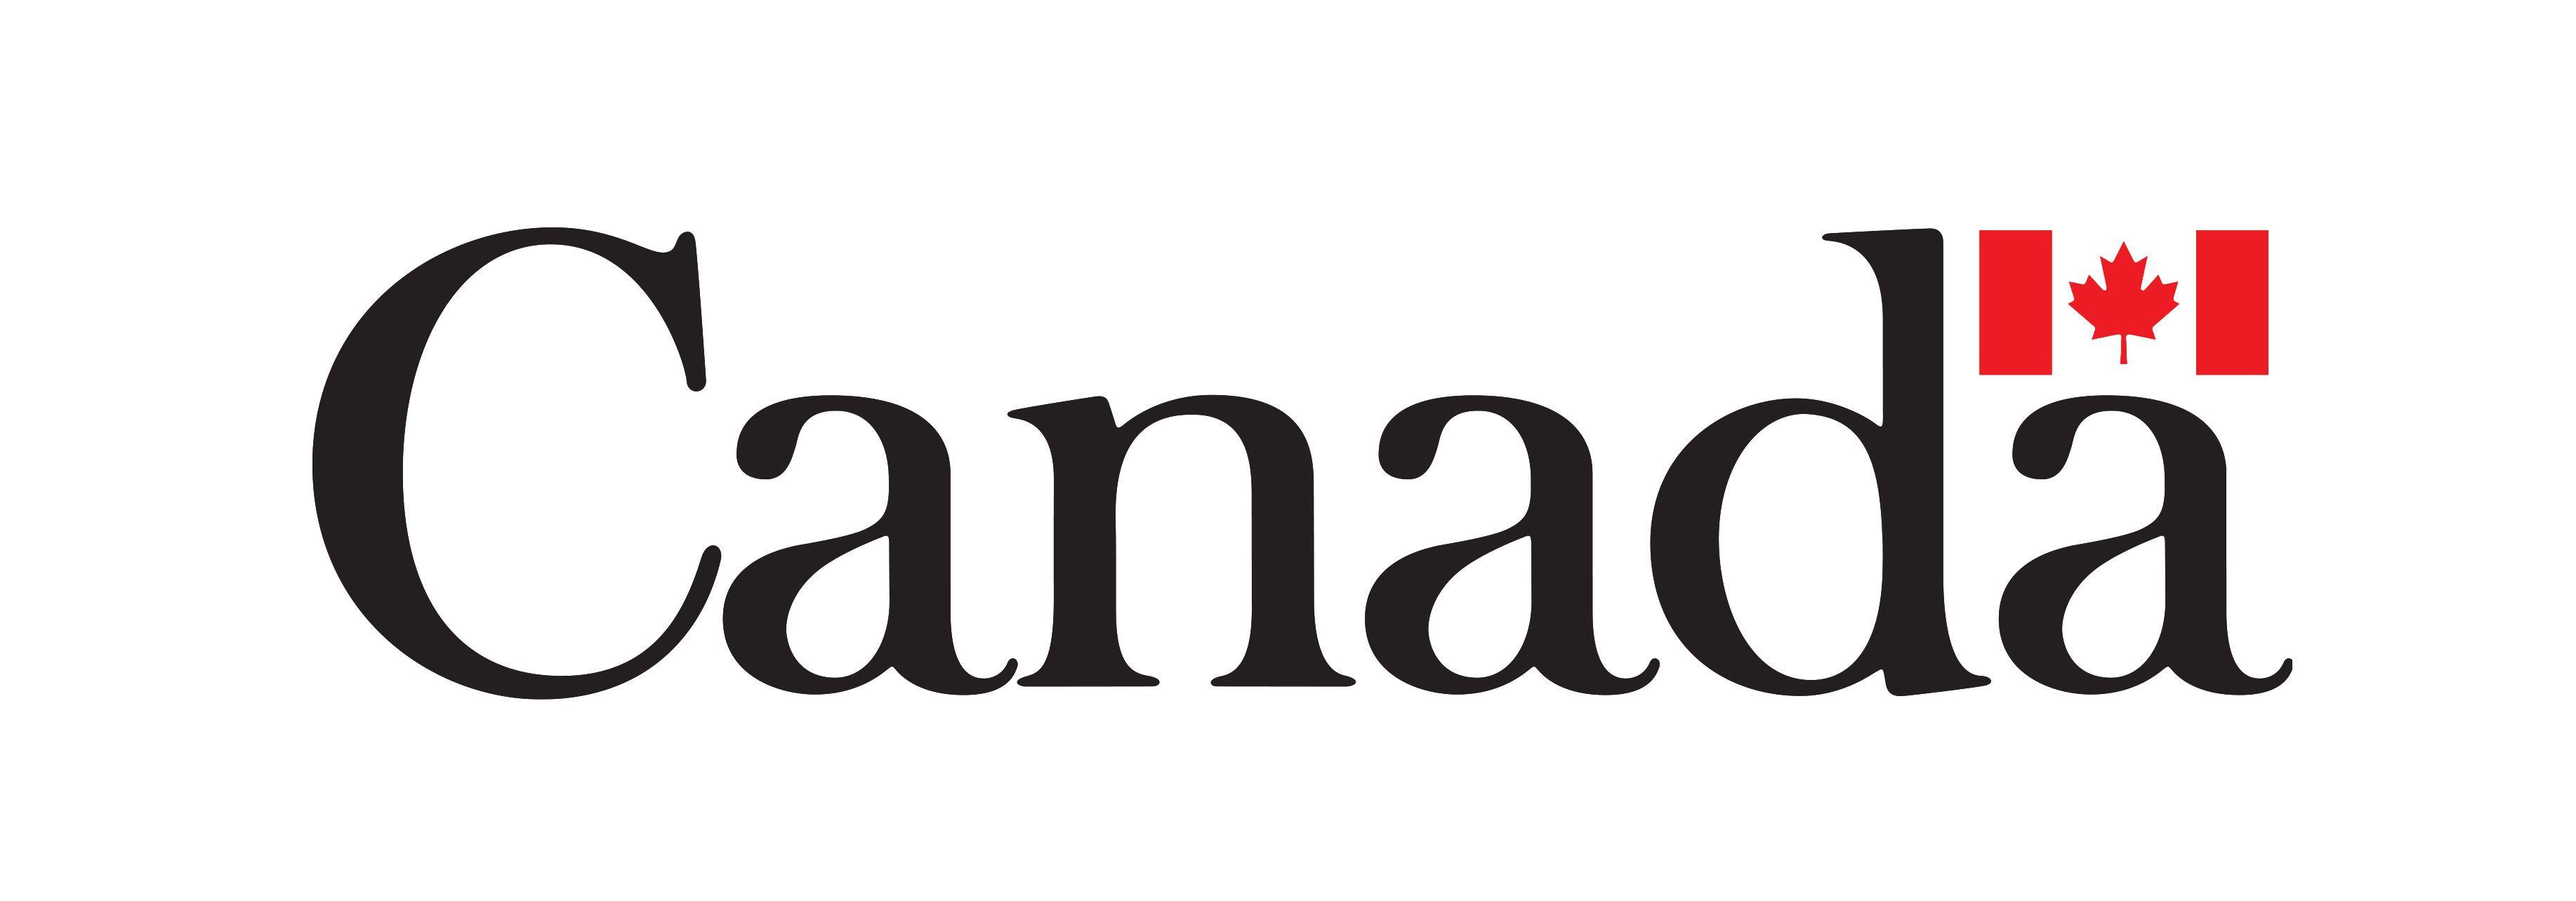 Canada Logo - canada-logo - Canada 2067